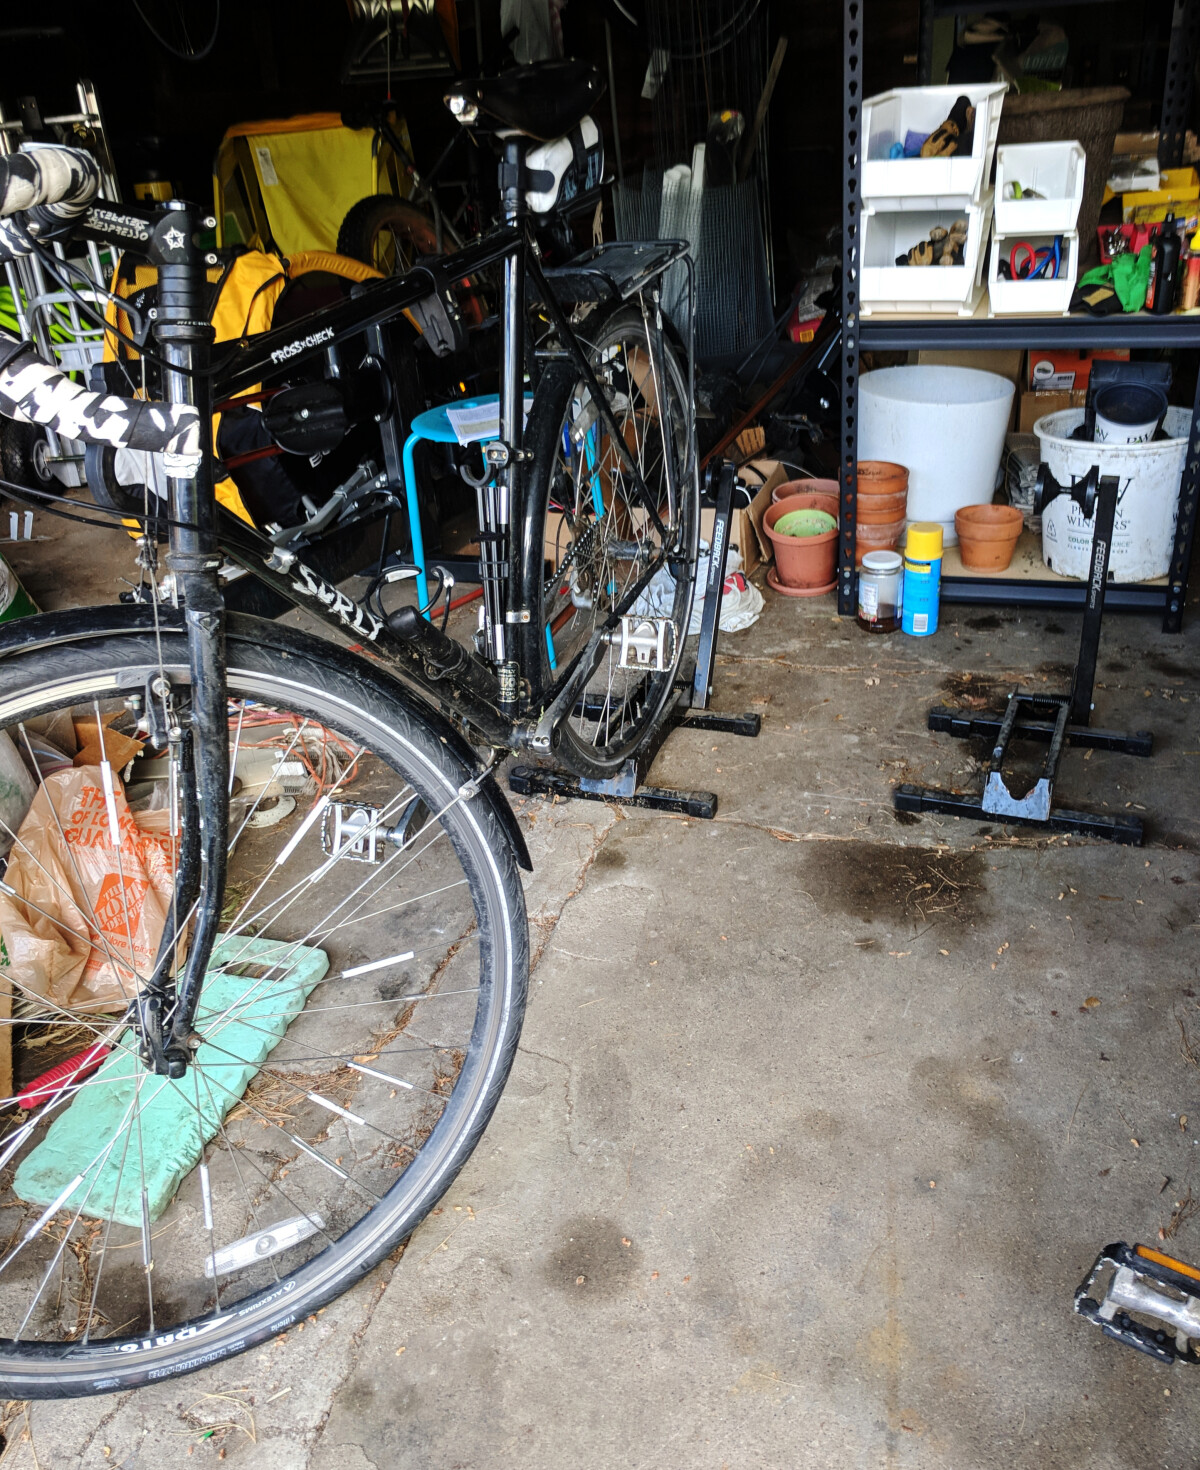 Freestanding bike racks